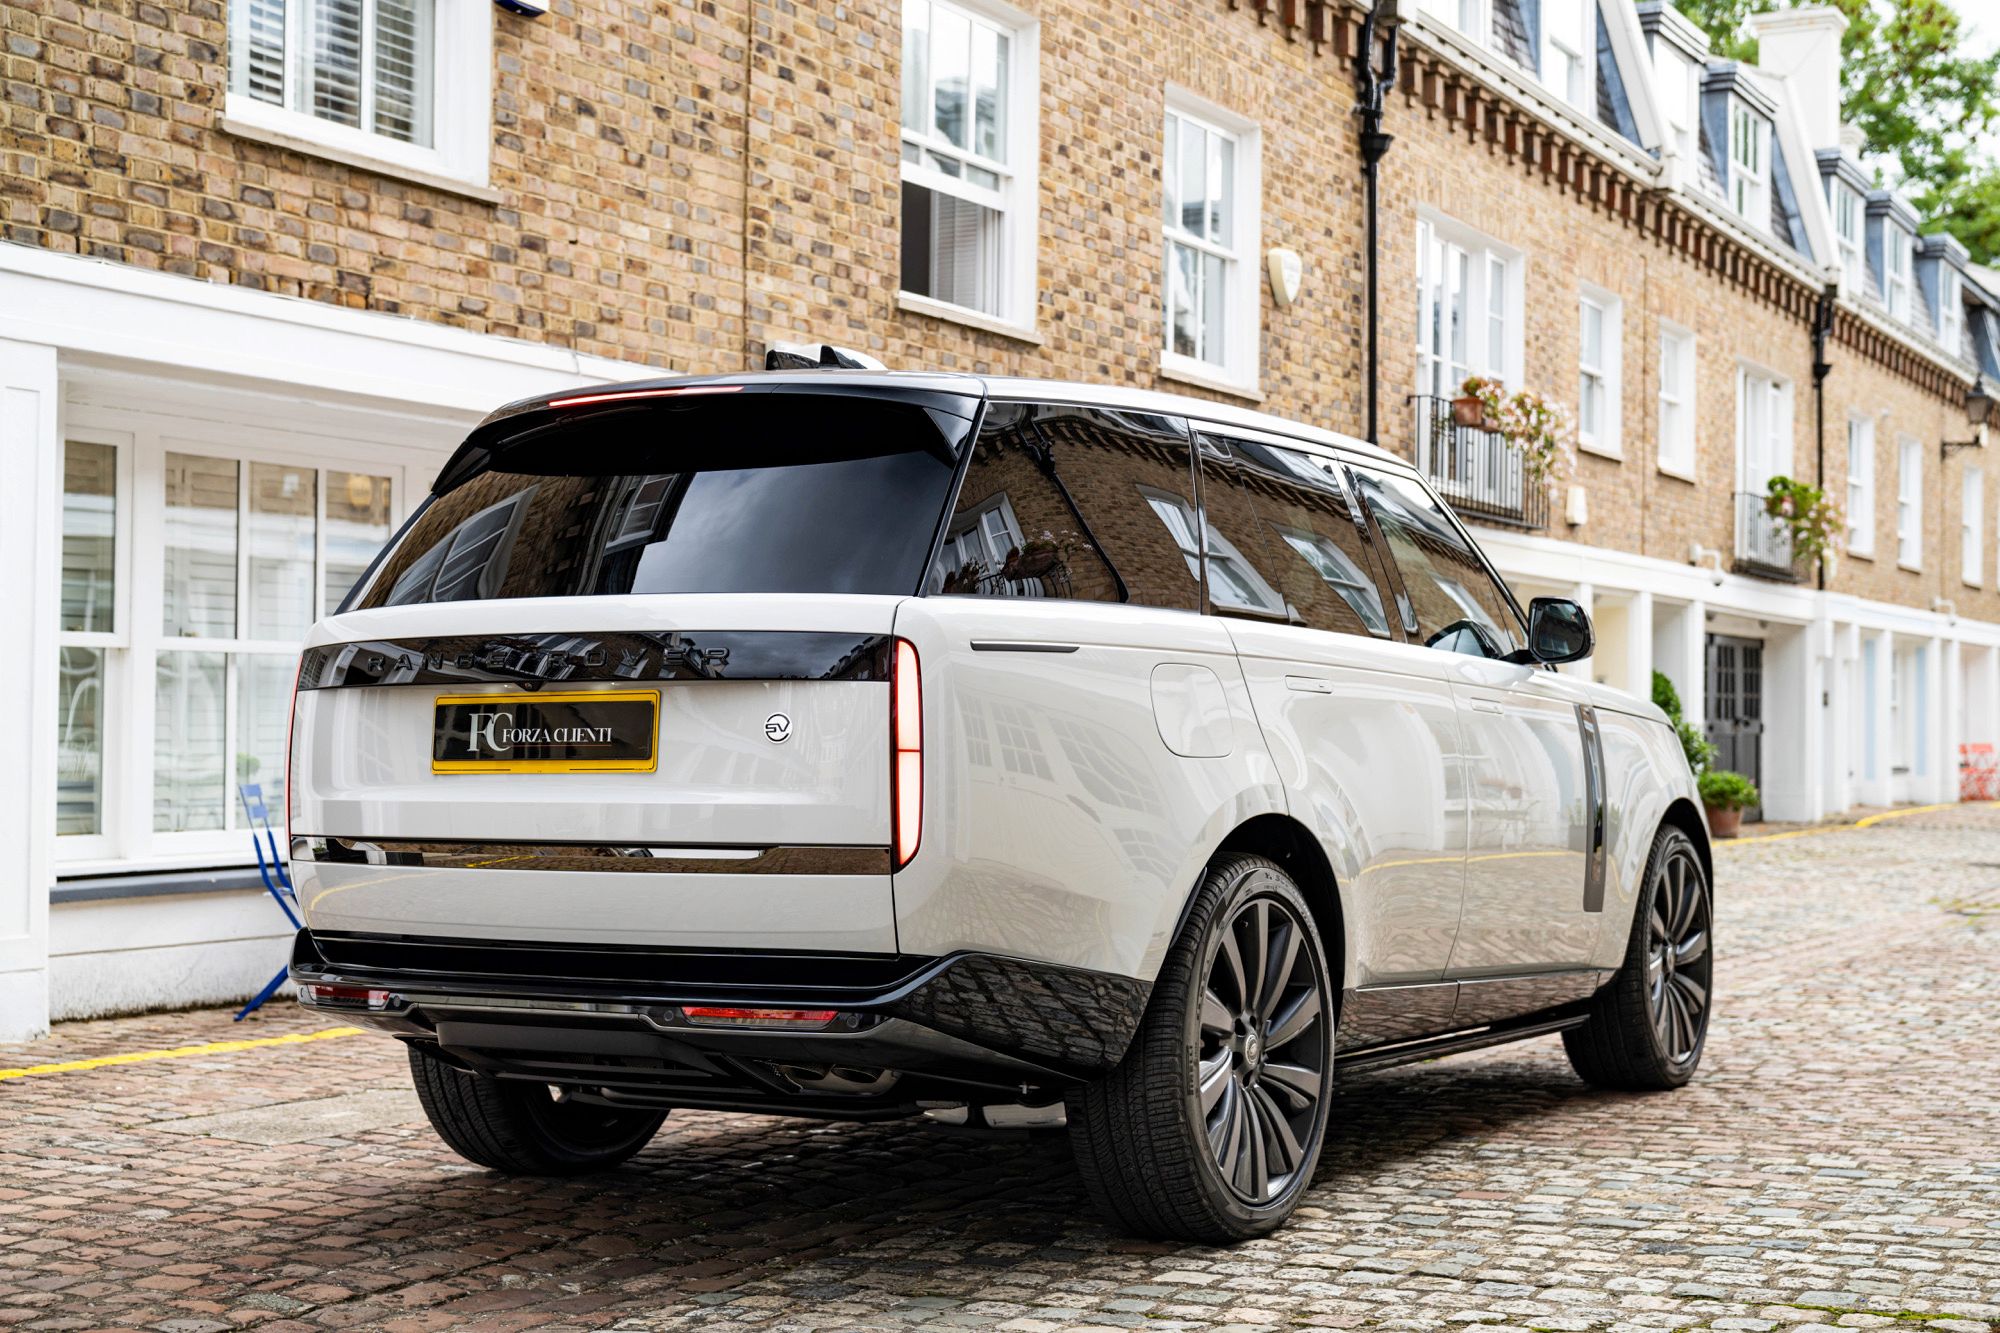 New £250,000 Range Rover Lansdowne Edition unveiled